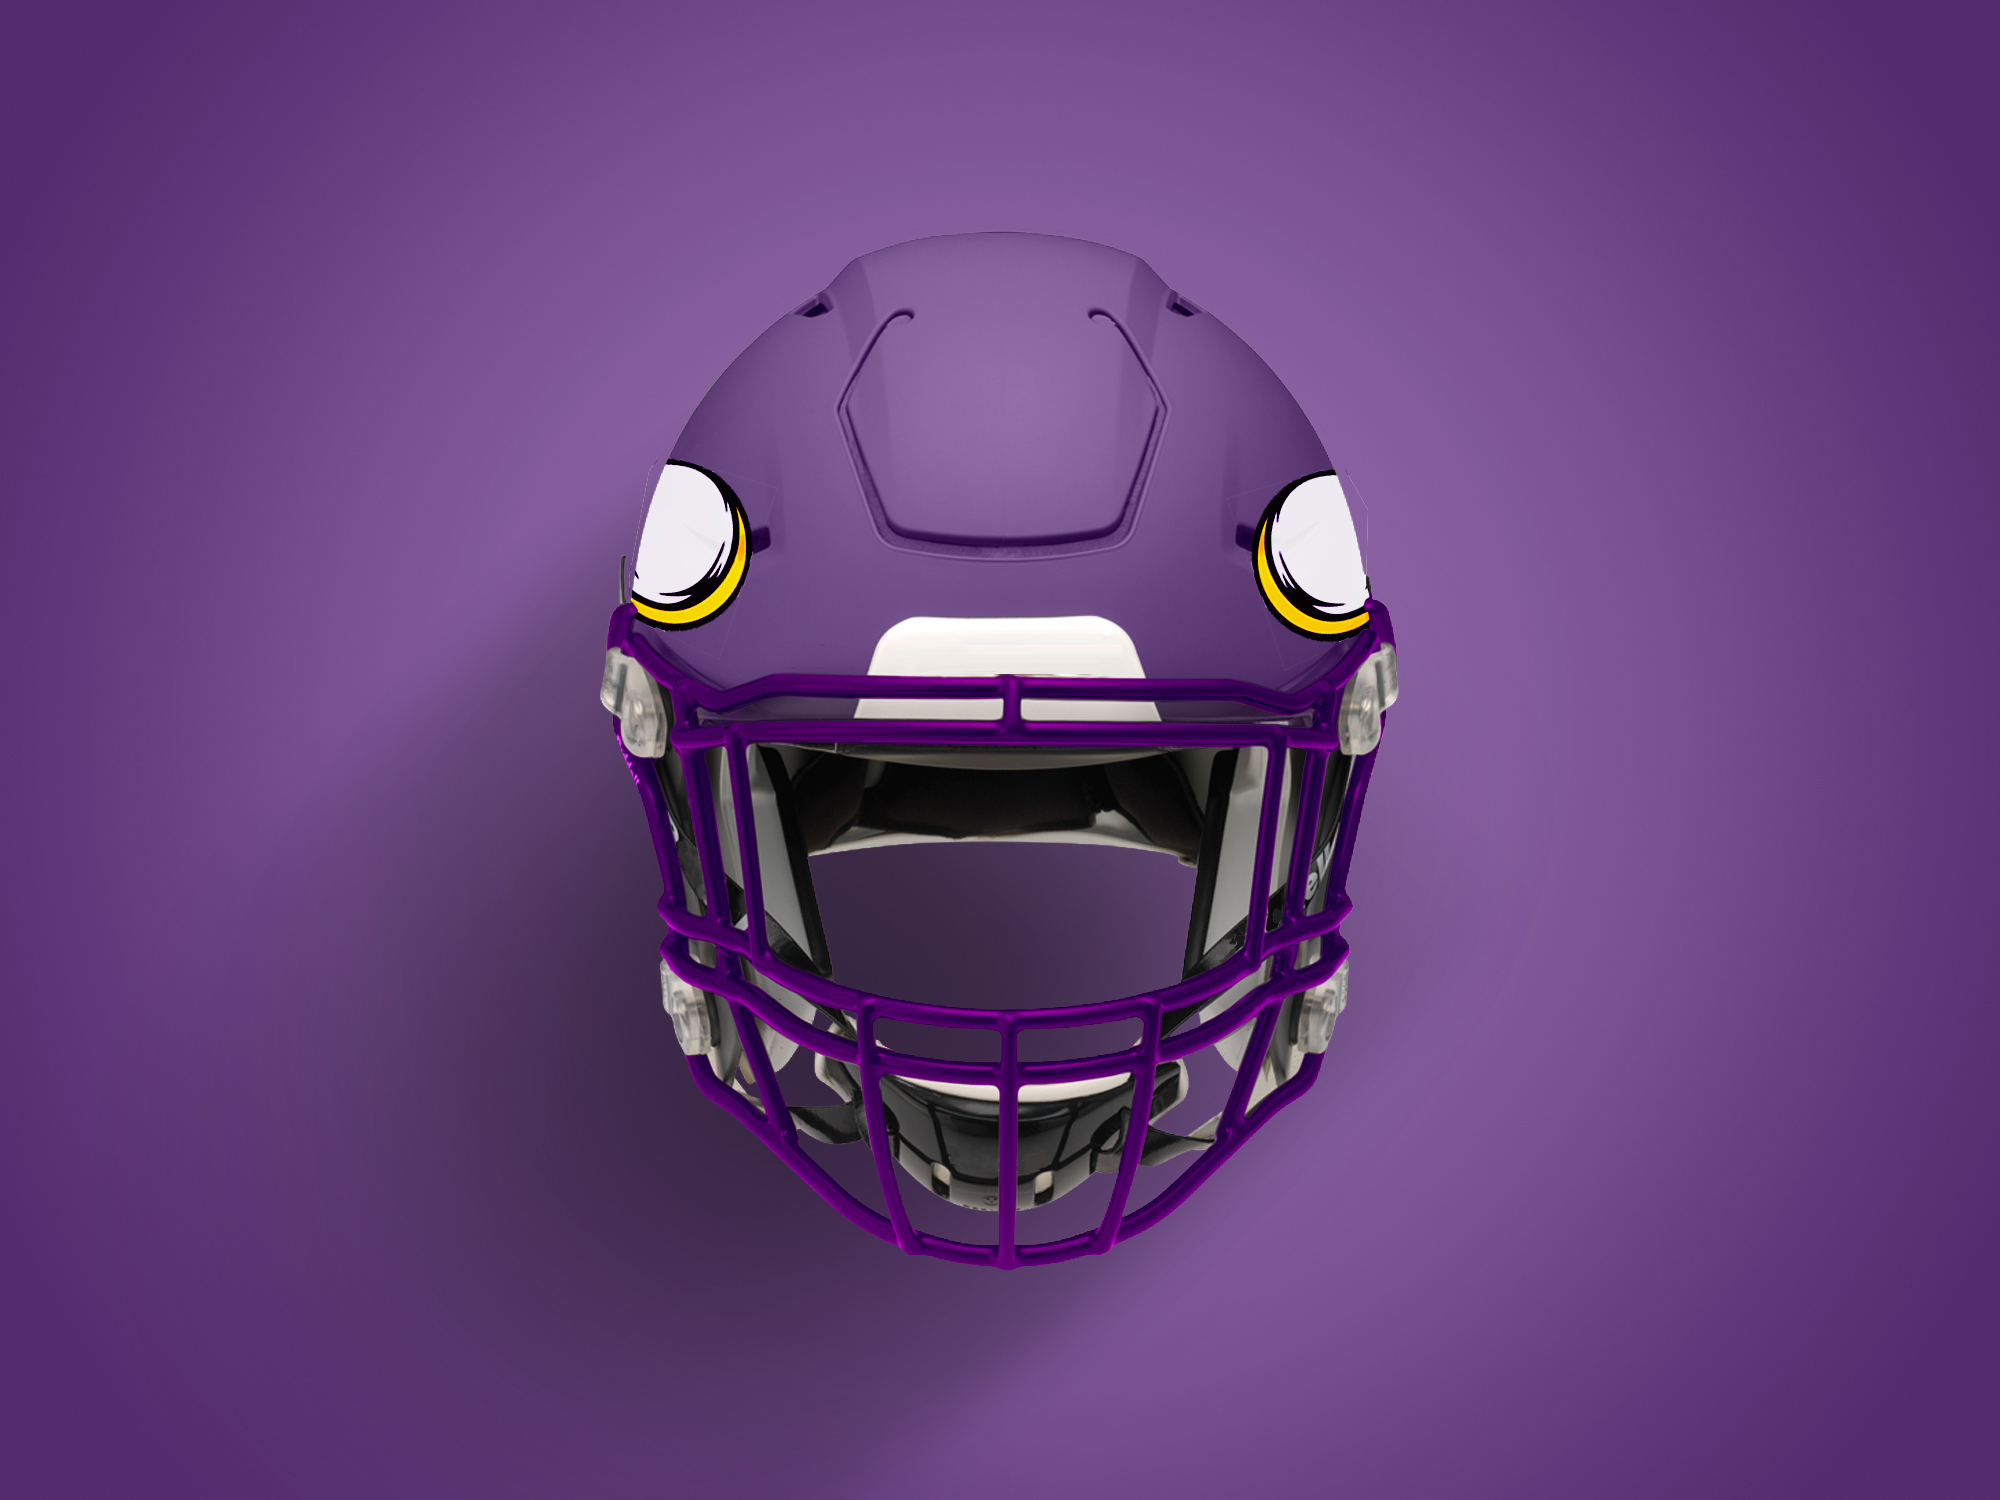 Mockup capacete futebol americano